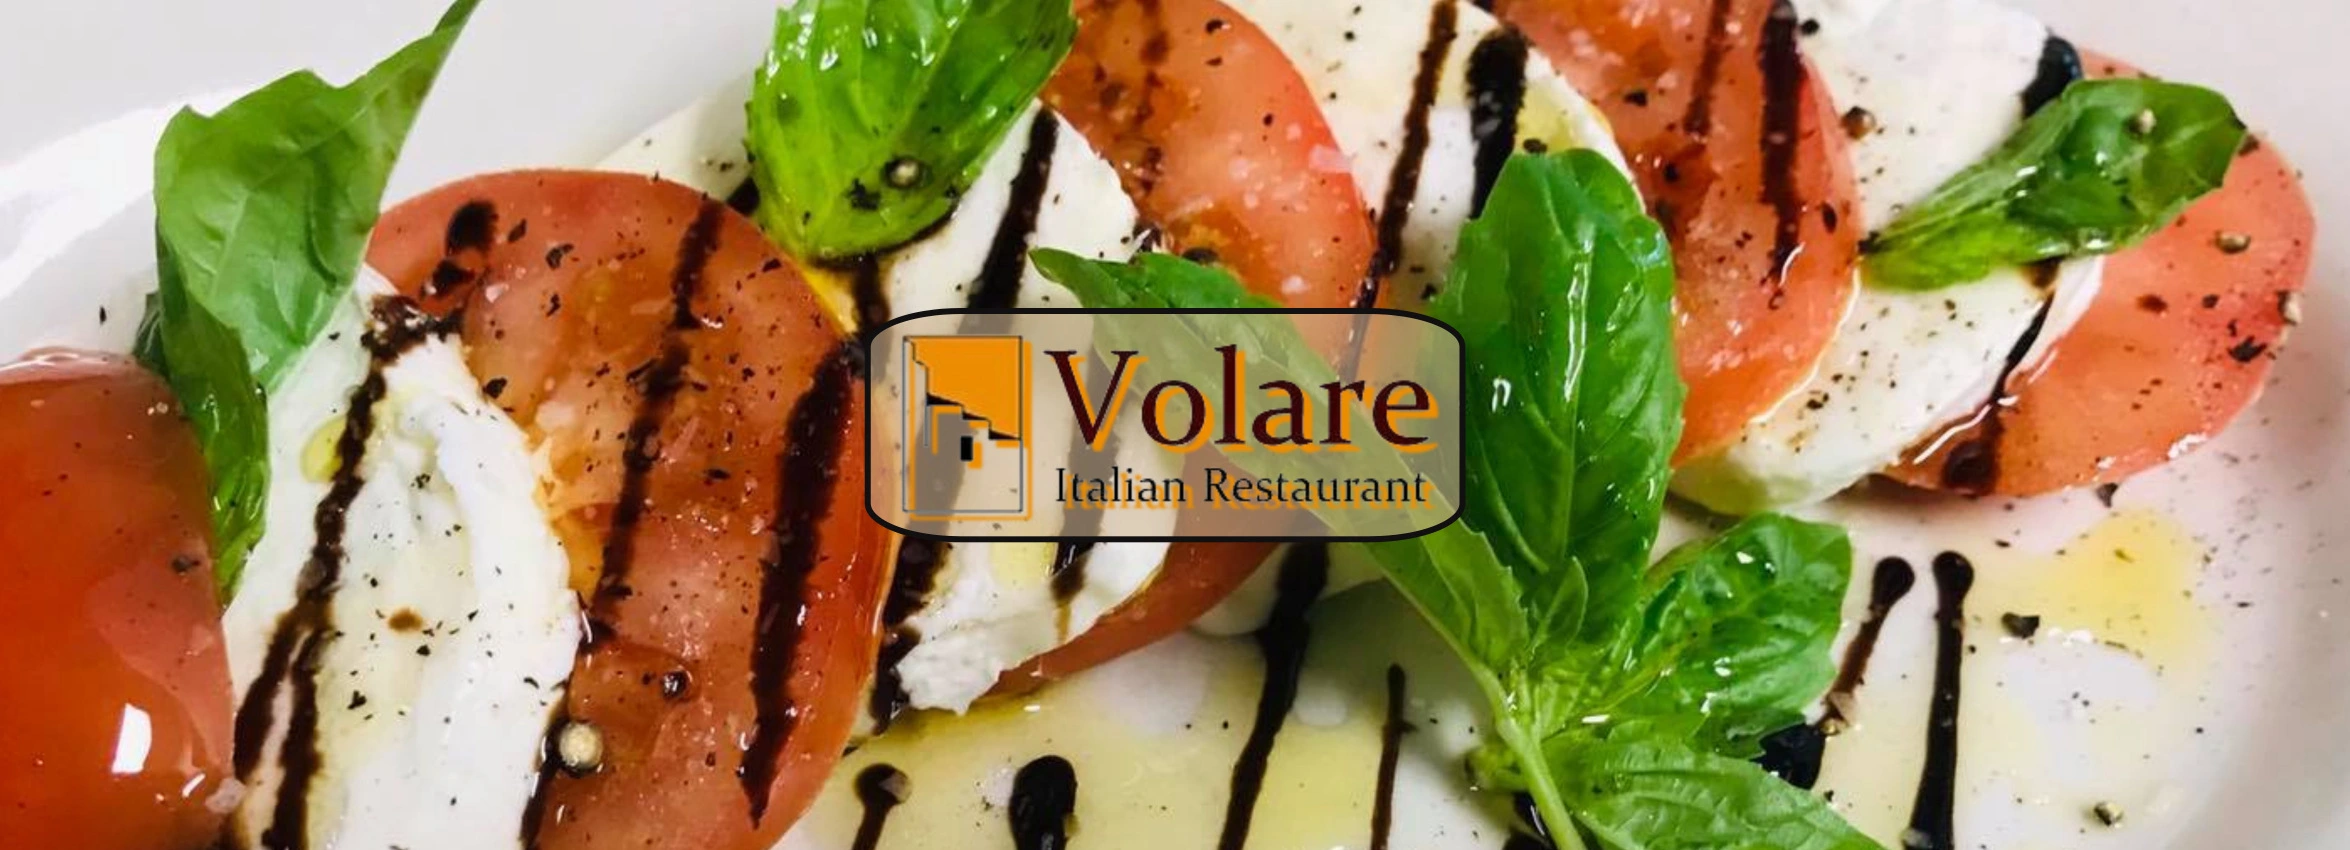 Volare-Italian-Restaurant_desktop_ET